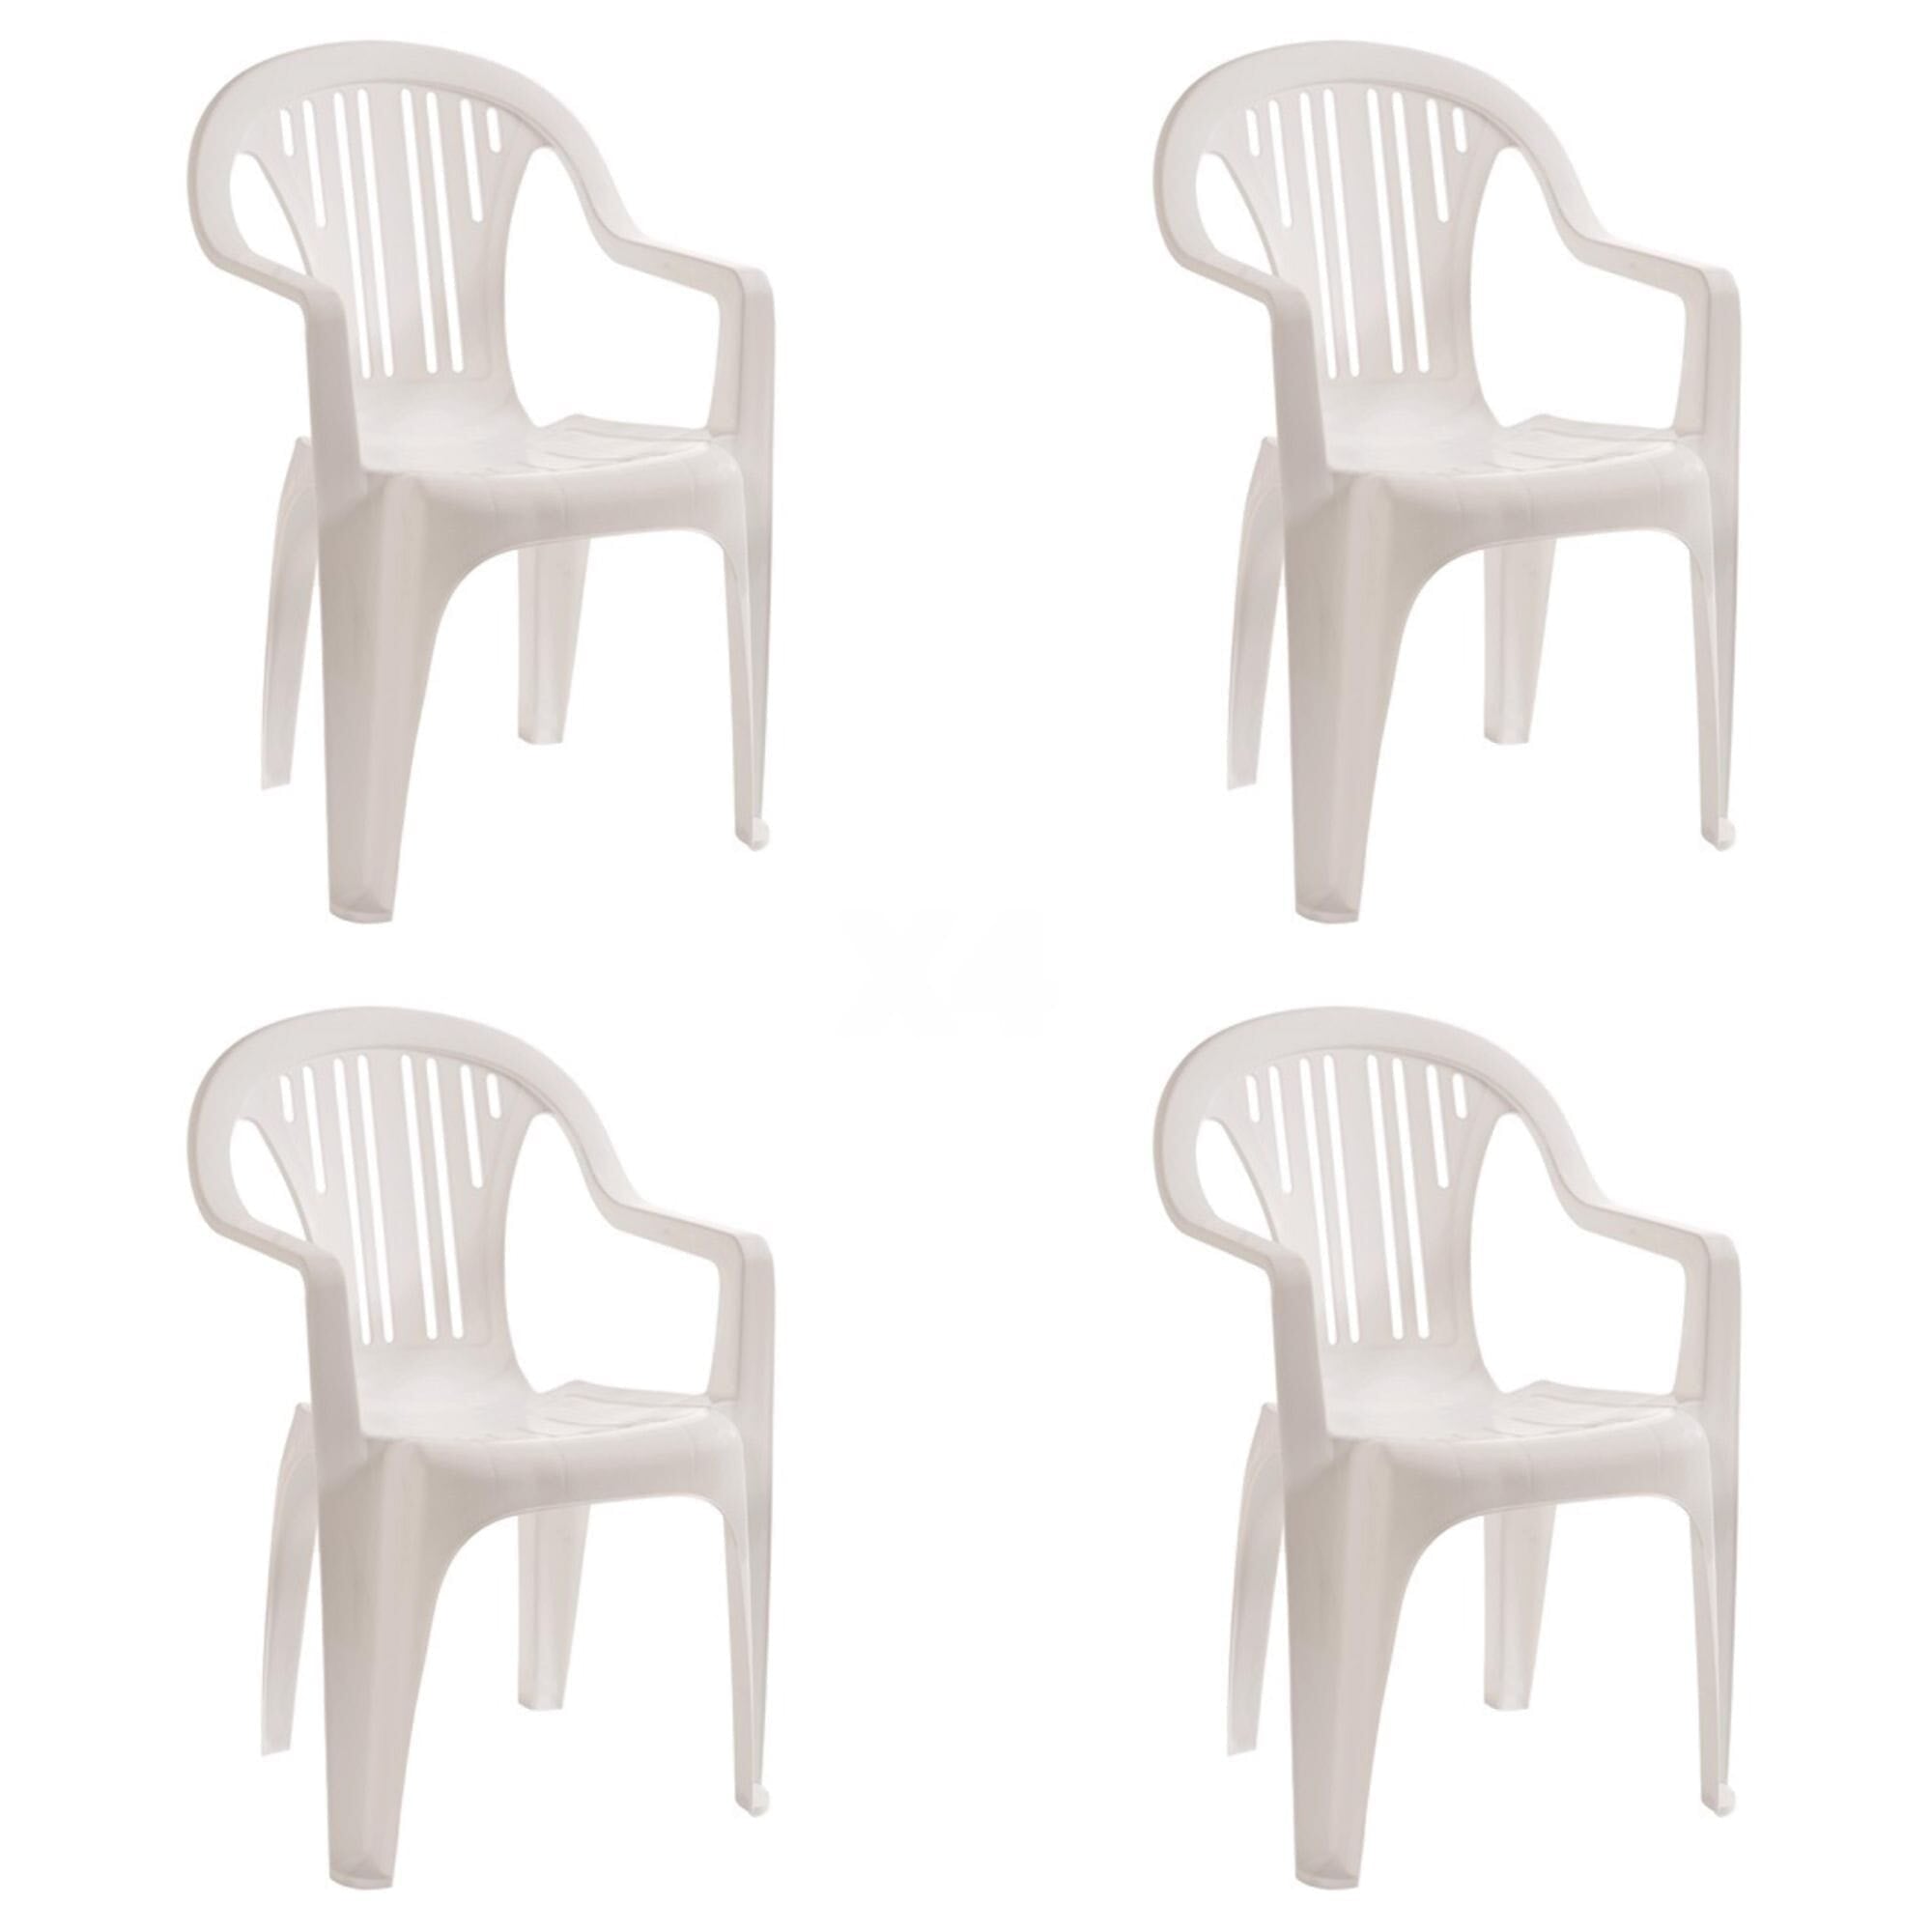 Garbar Port armchair set 4 white 4 white